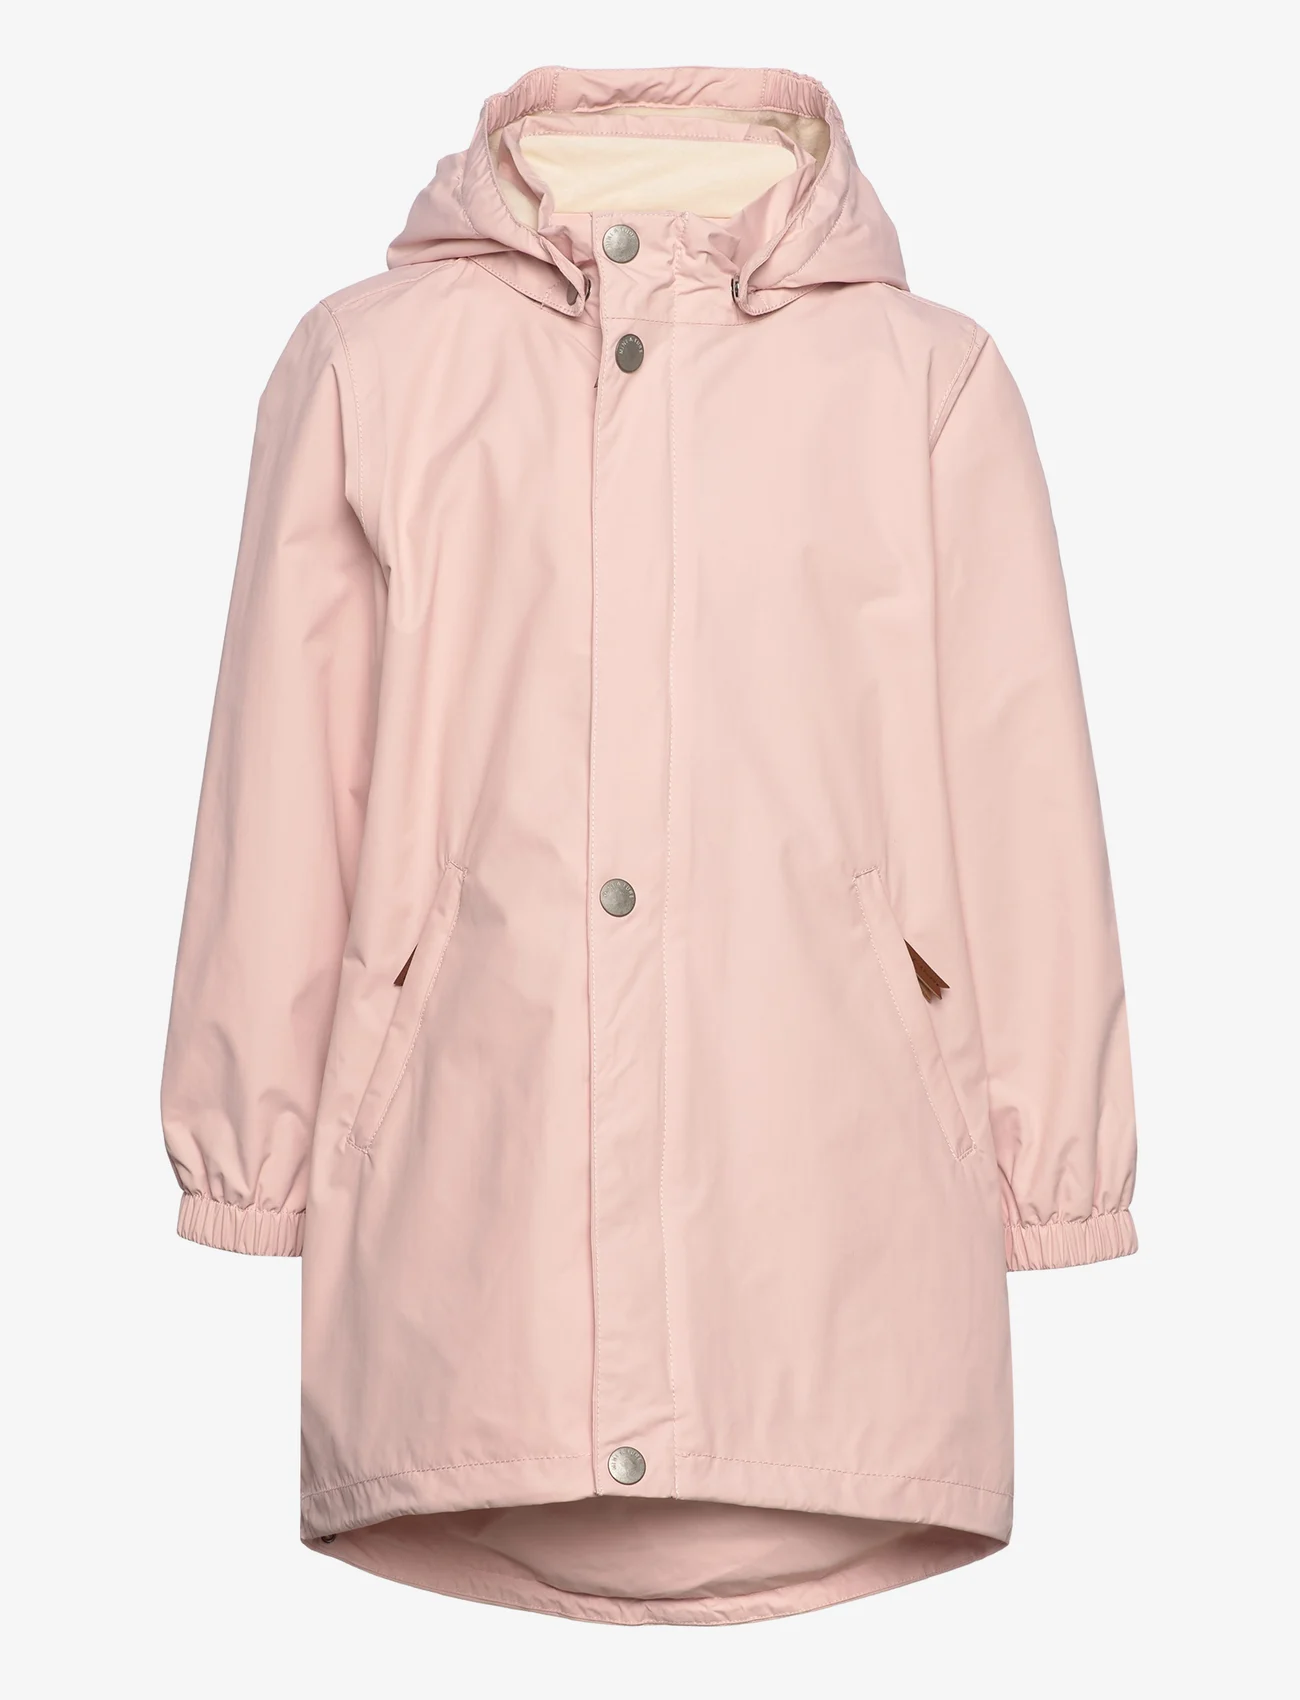 Mini A Ture - Vivica fleece lined spring jacket. GRS - parkad - rose smoke - 0